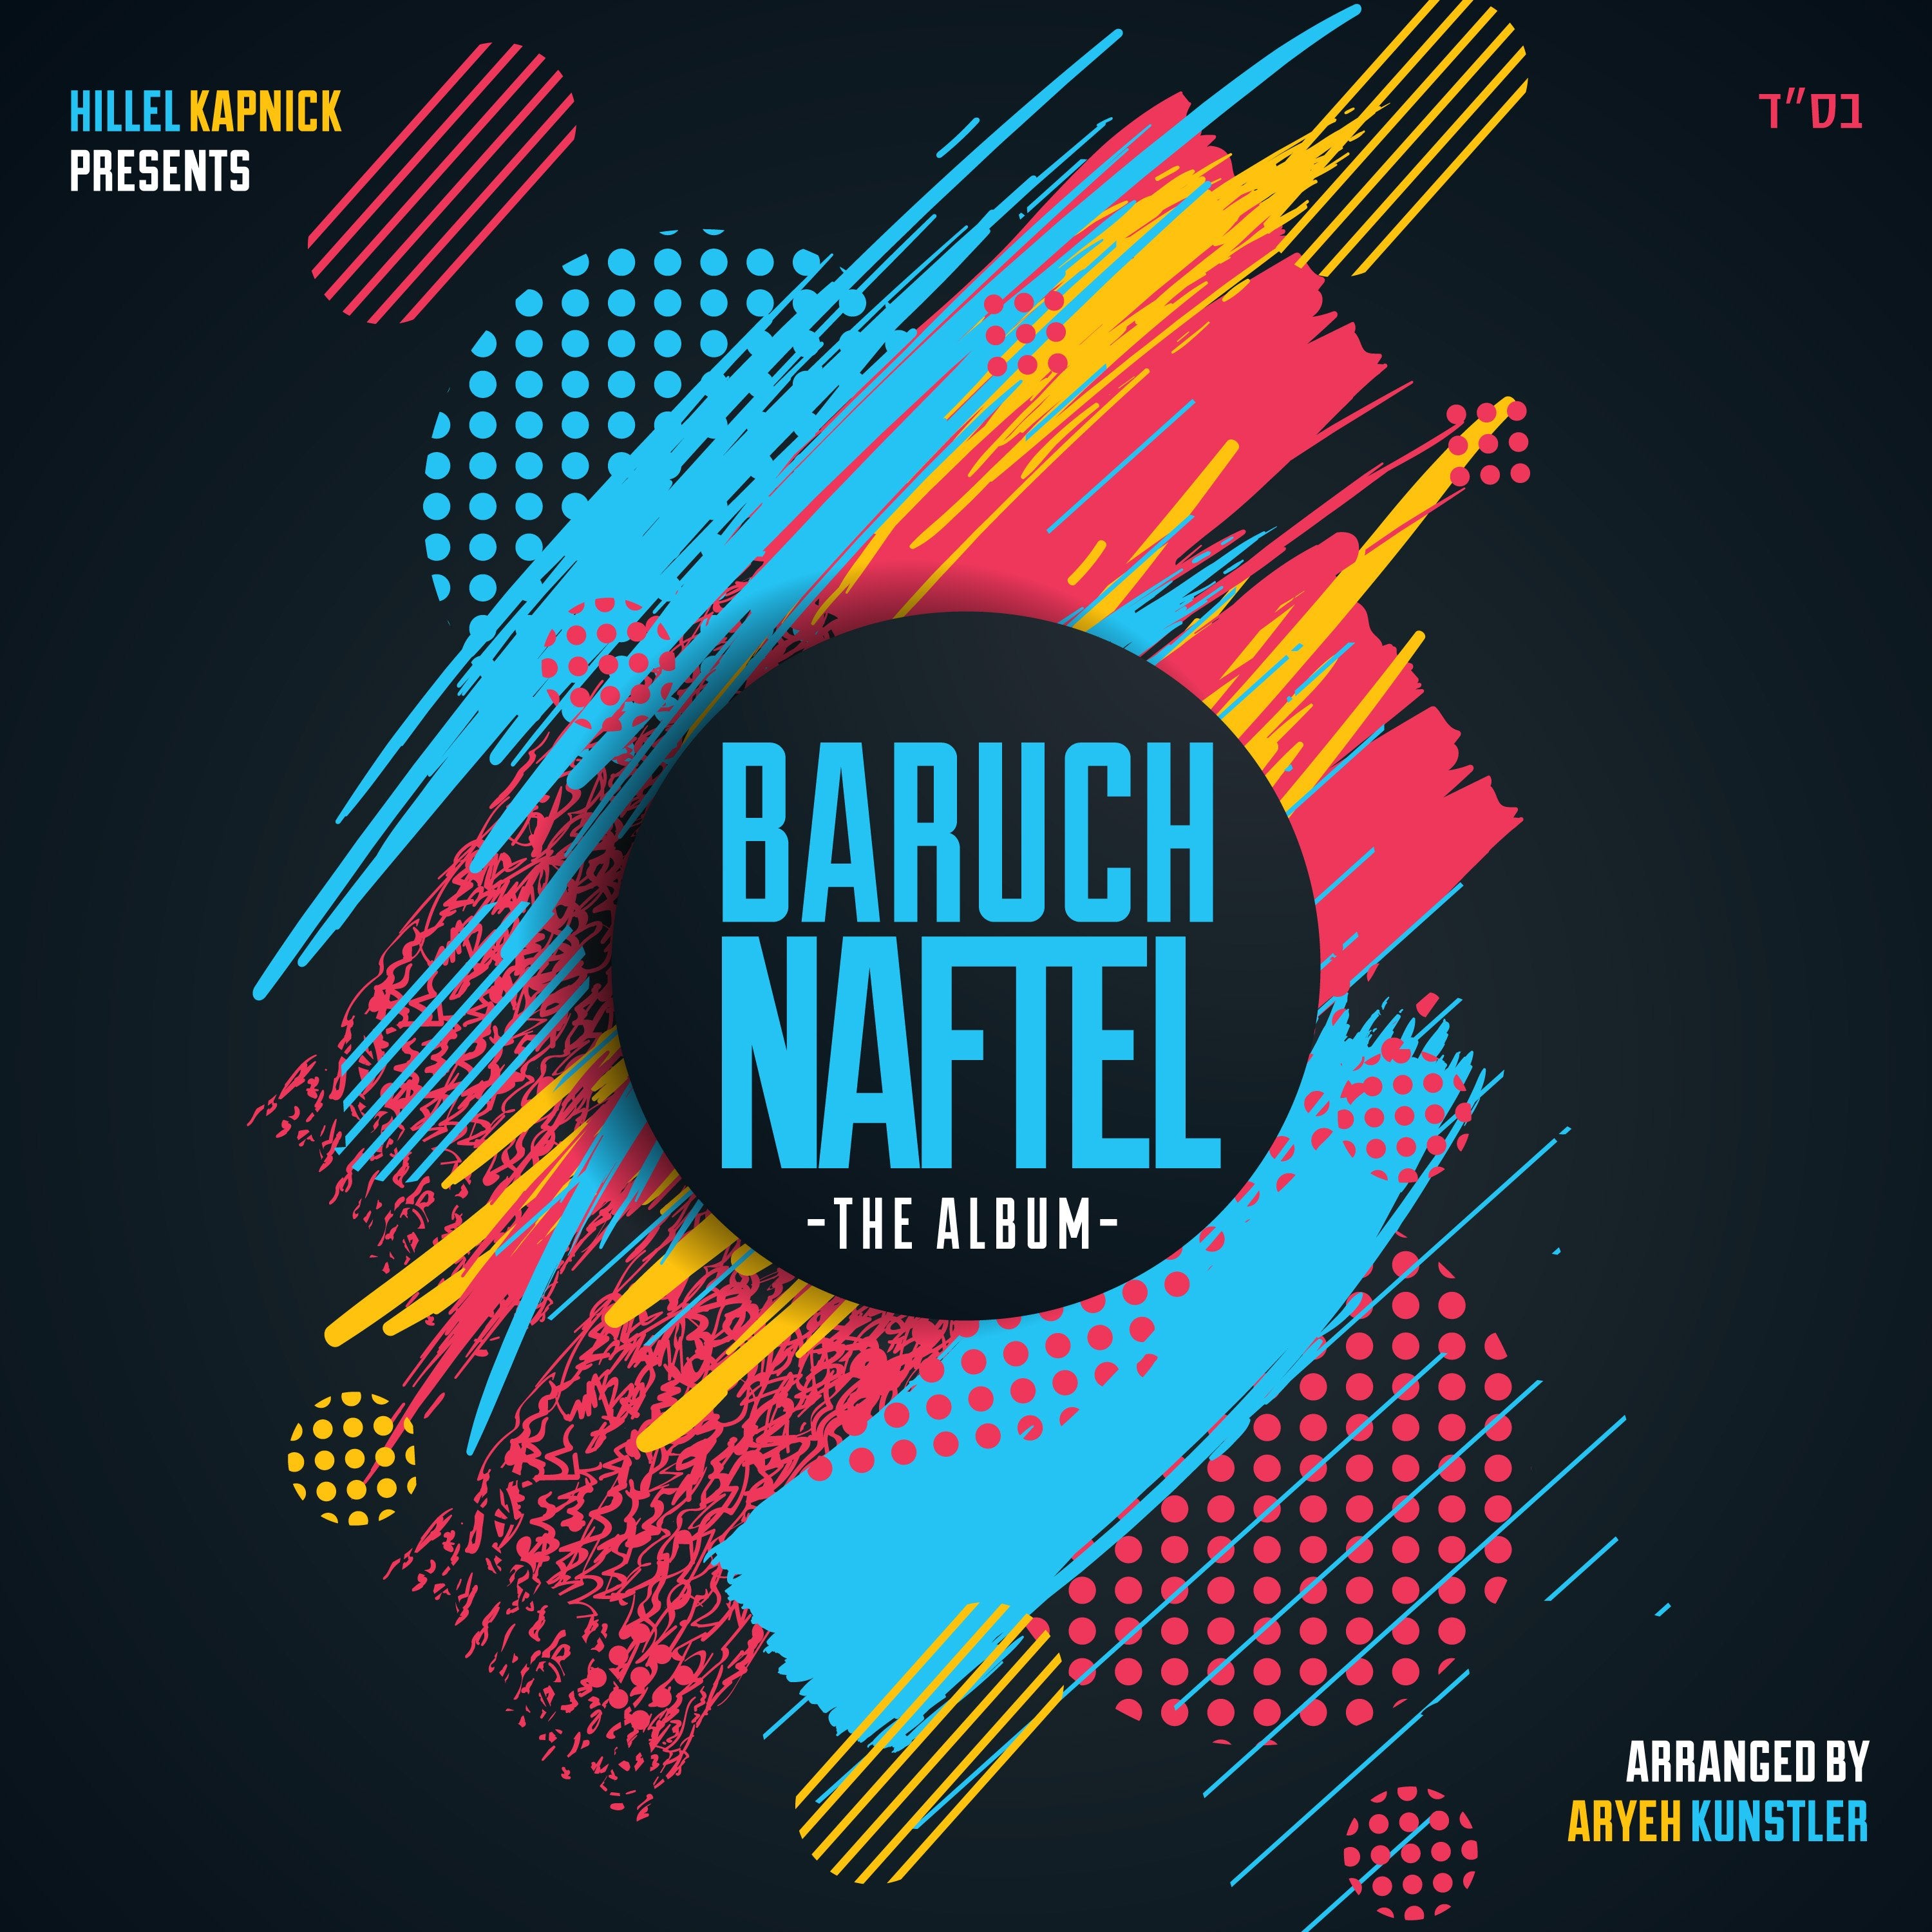 Baruch Naftel - The Album